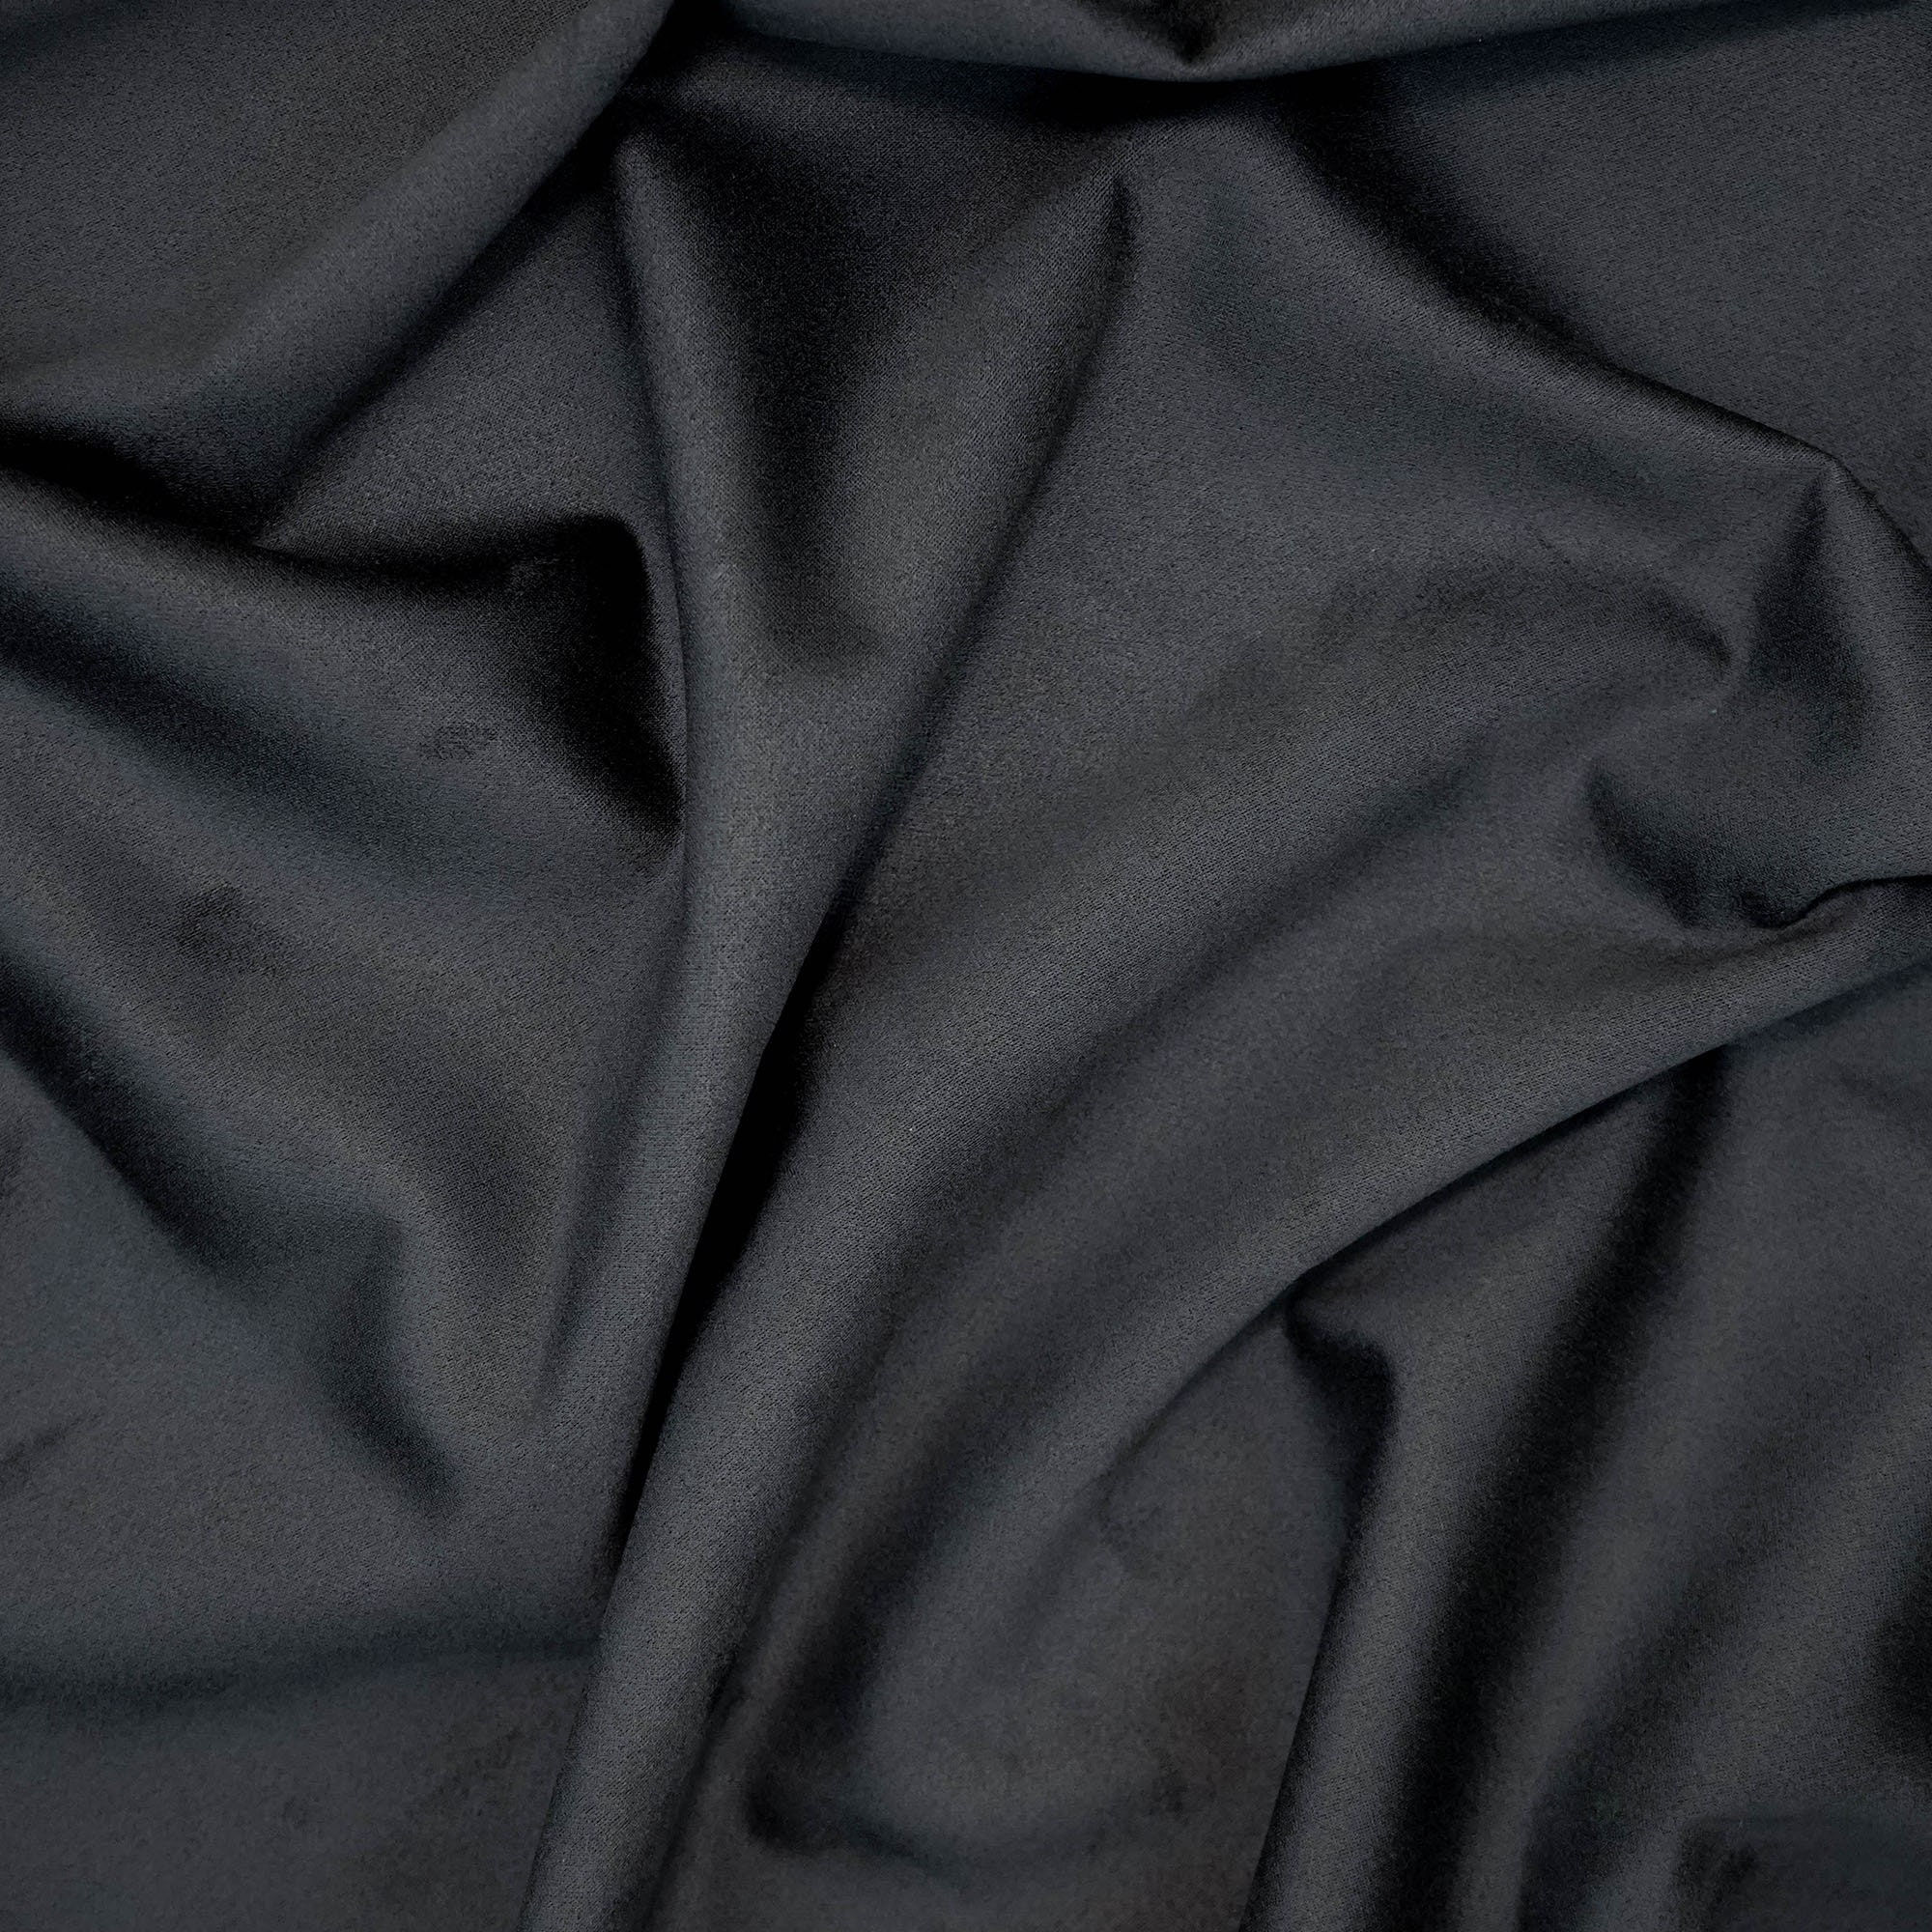 Black Headlining Suede Stretch Spandex Fabric For Auto Car Headliner Trim  Dash